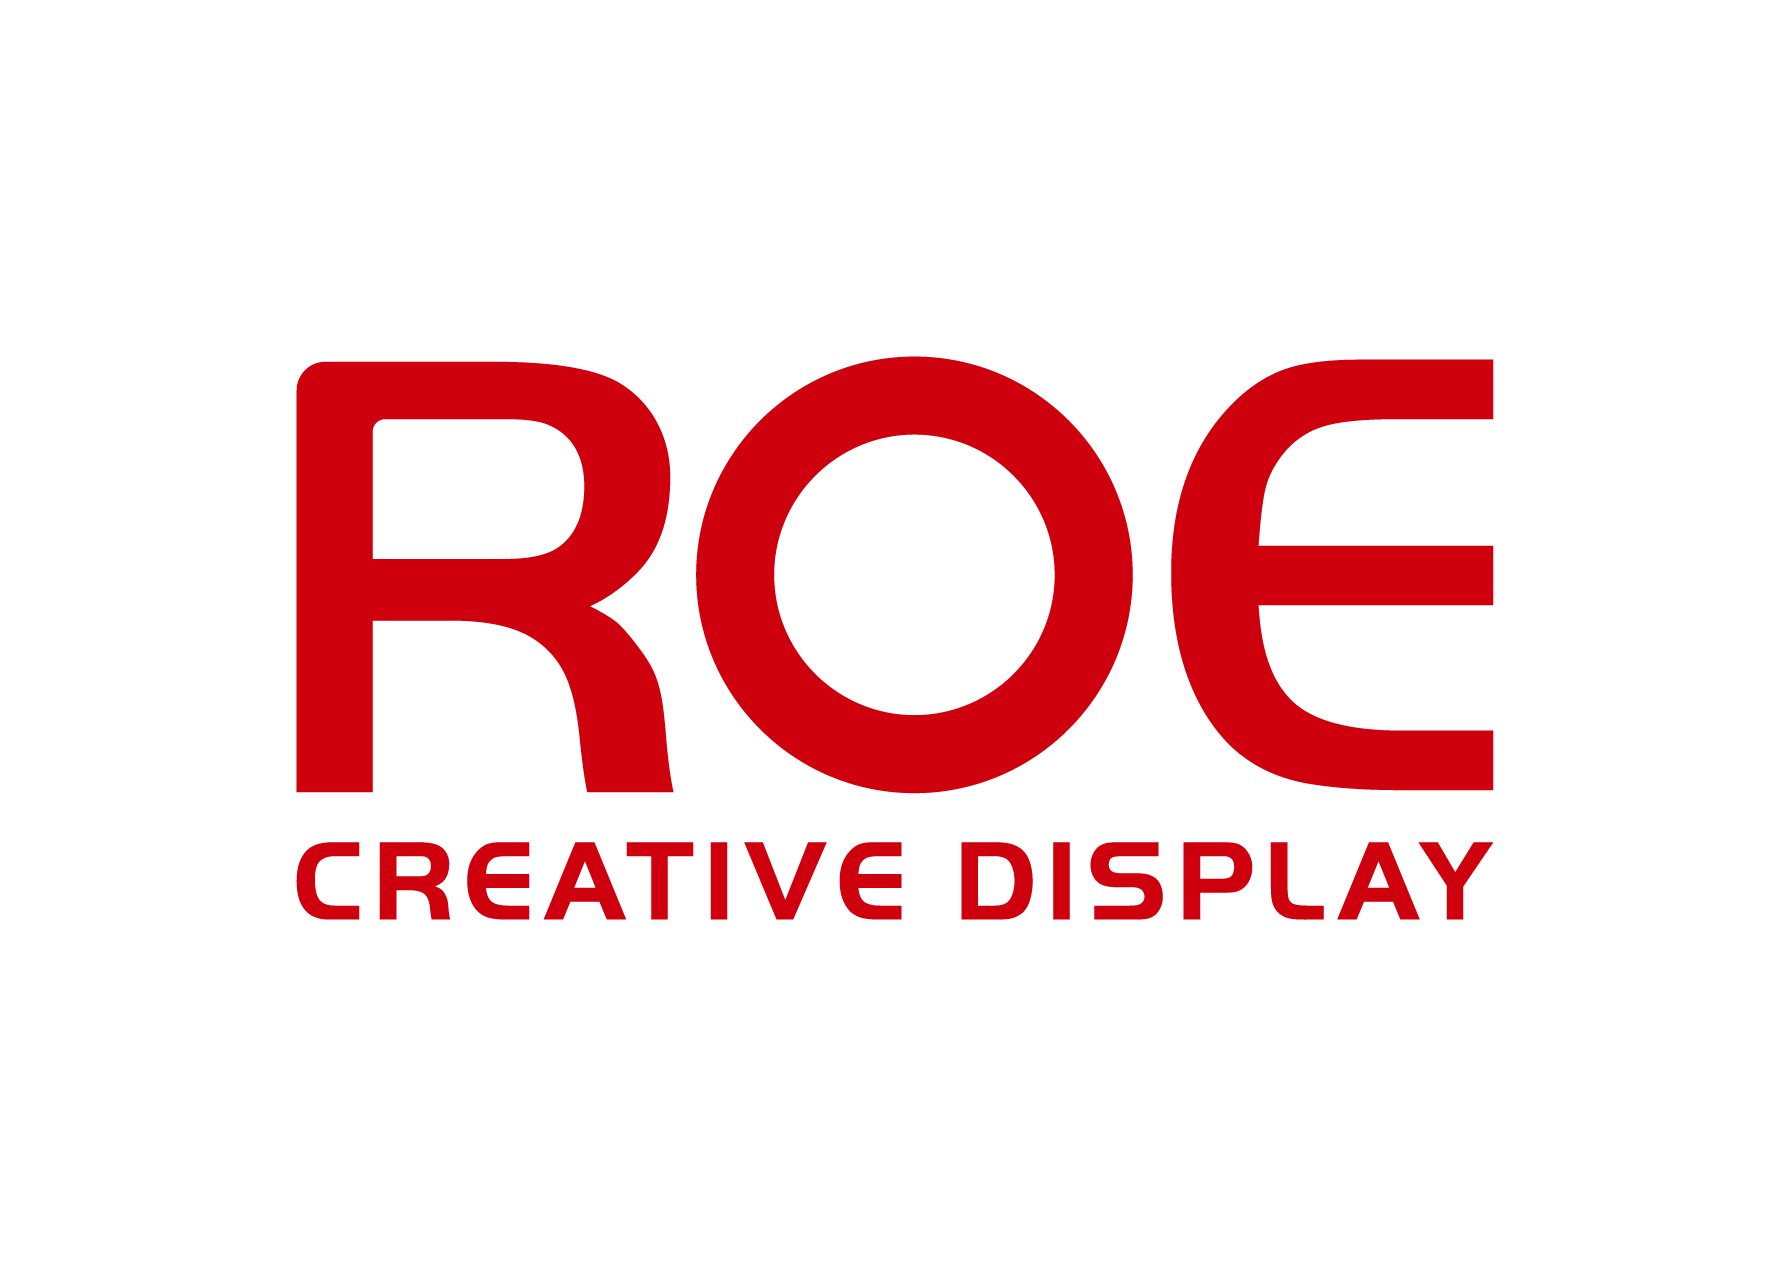 Roe logo. Логотип Роэ. Дисплей logo. Roe creativity display логотип PNG.